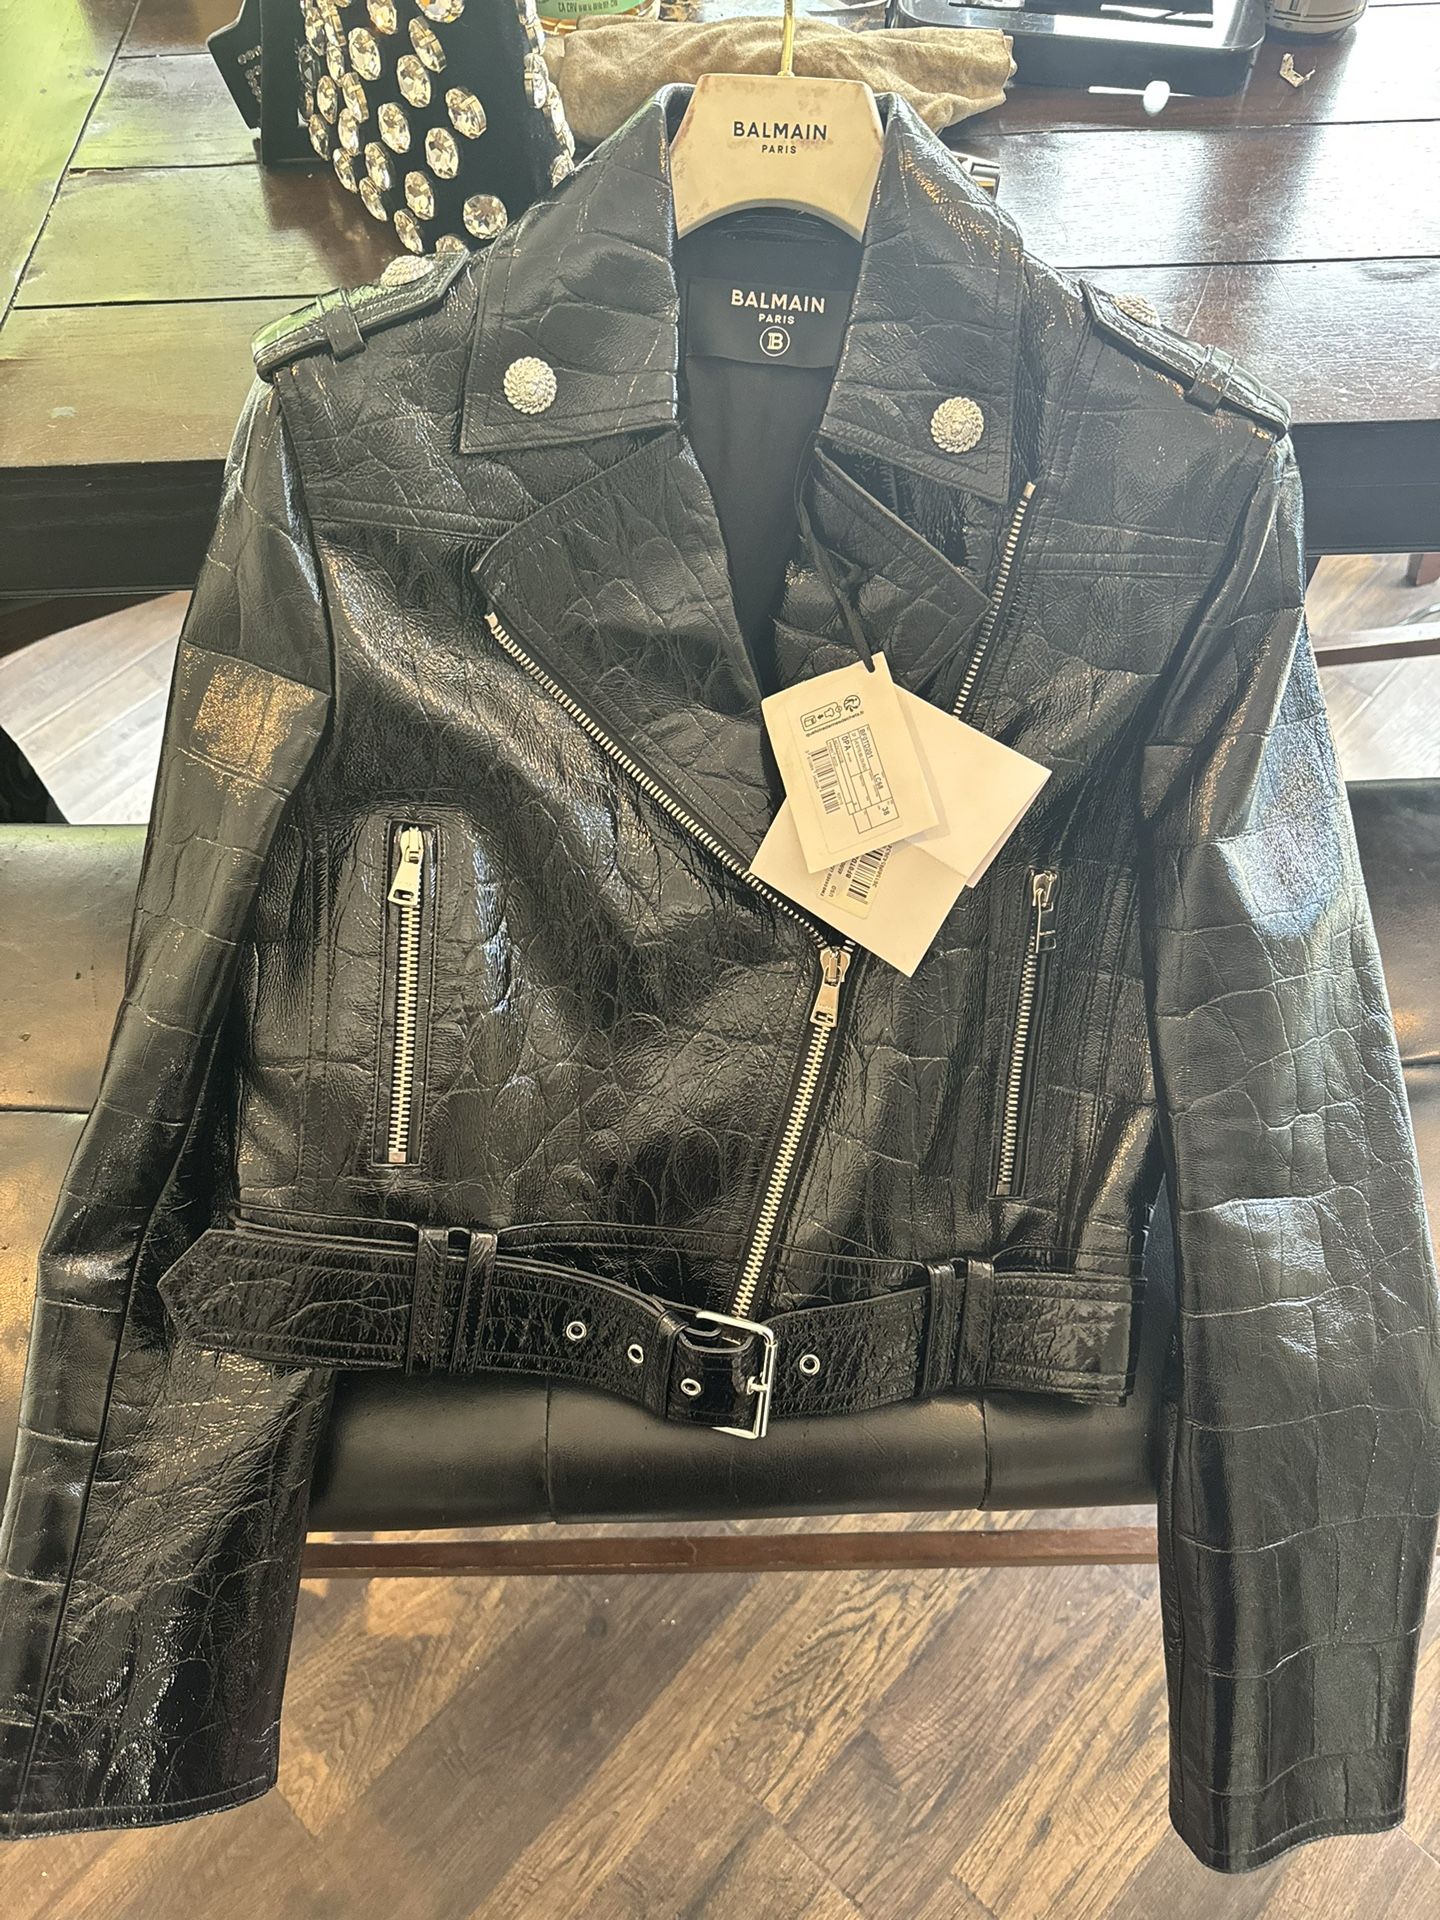 BALMAIN Leather Moto Jacket *Authentic*